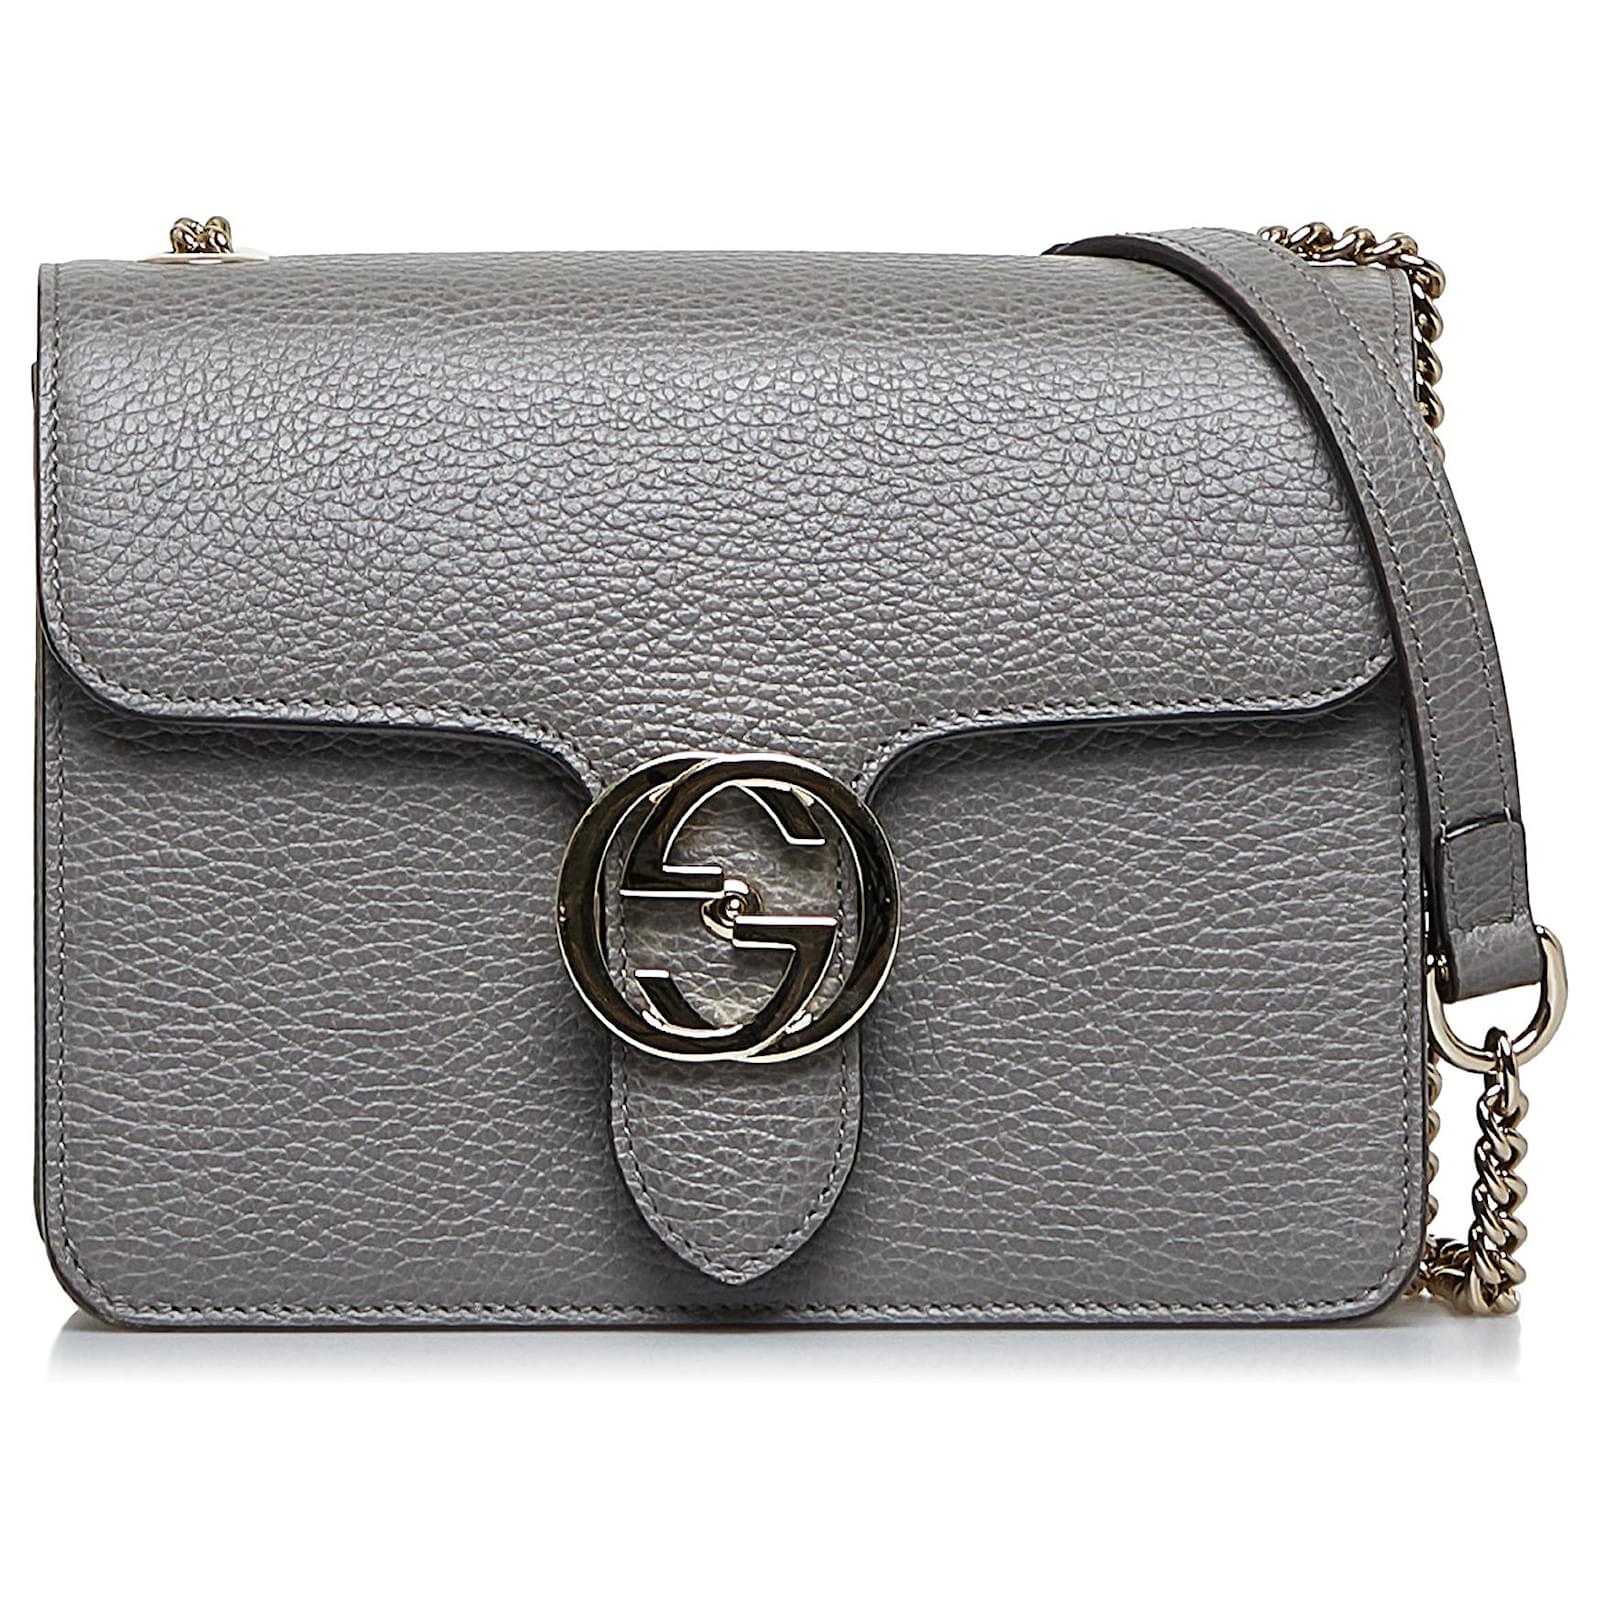 Gucci, Bags, New Gucci Interlocking Bag